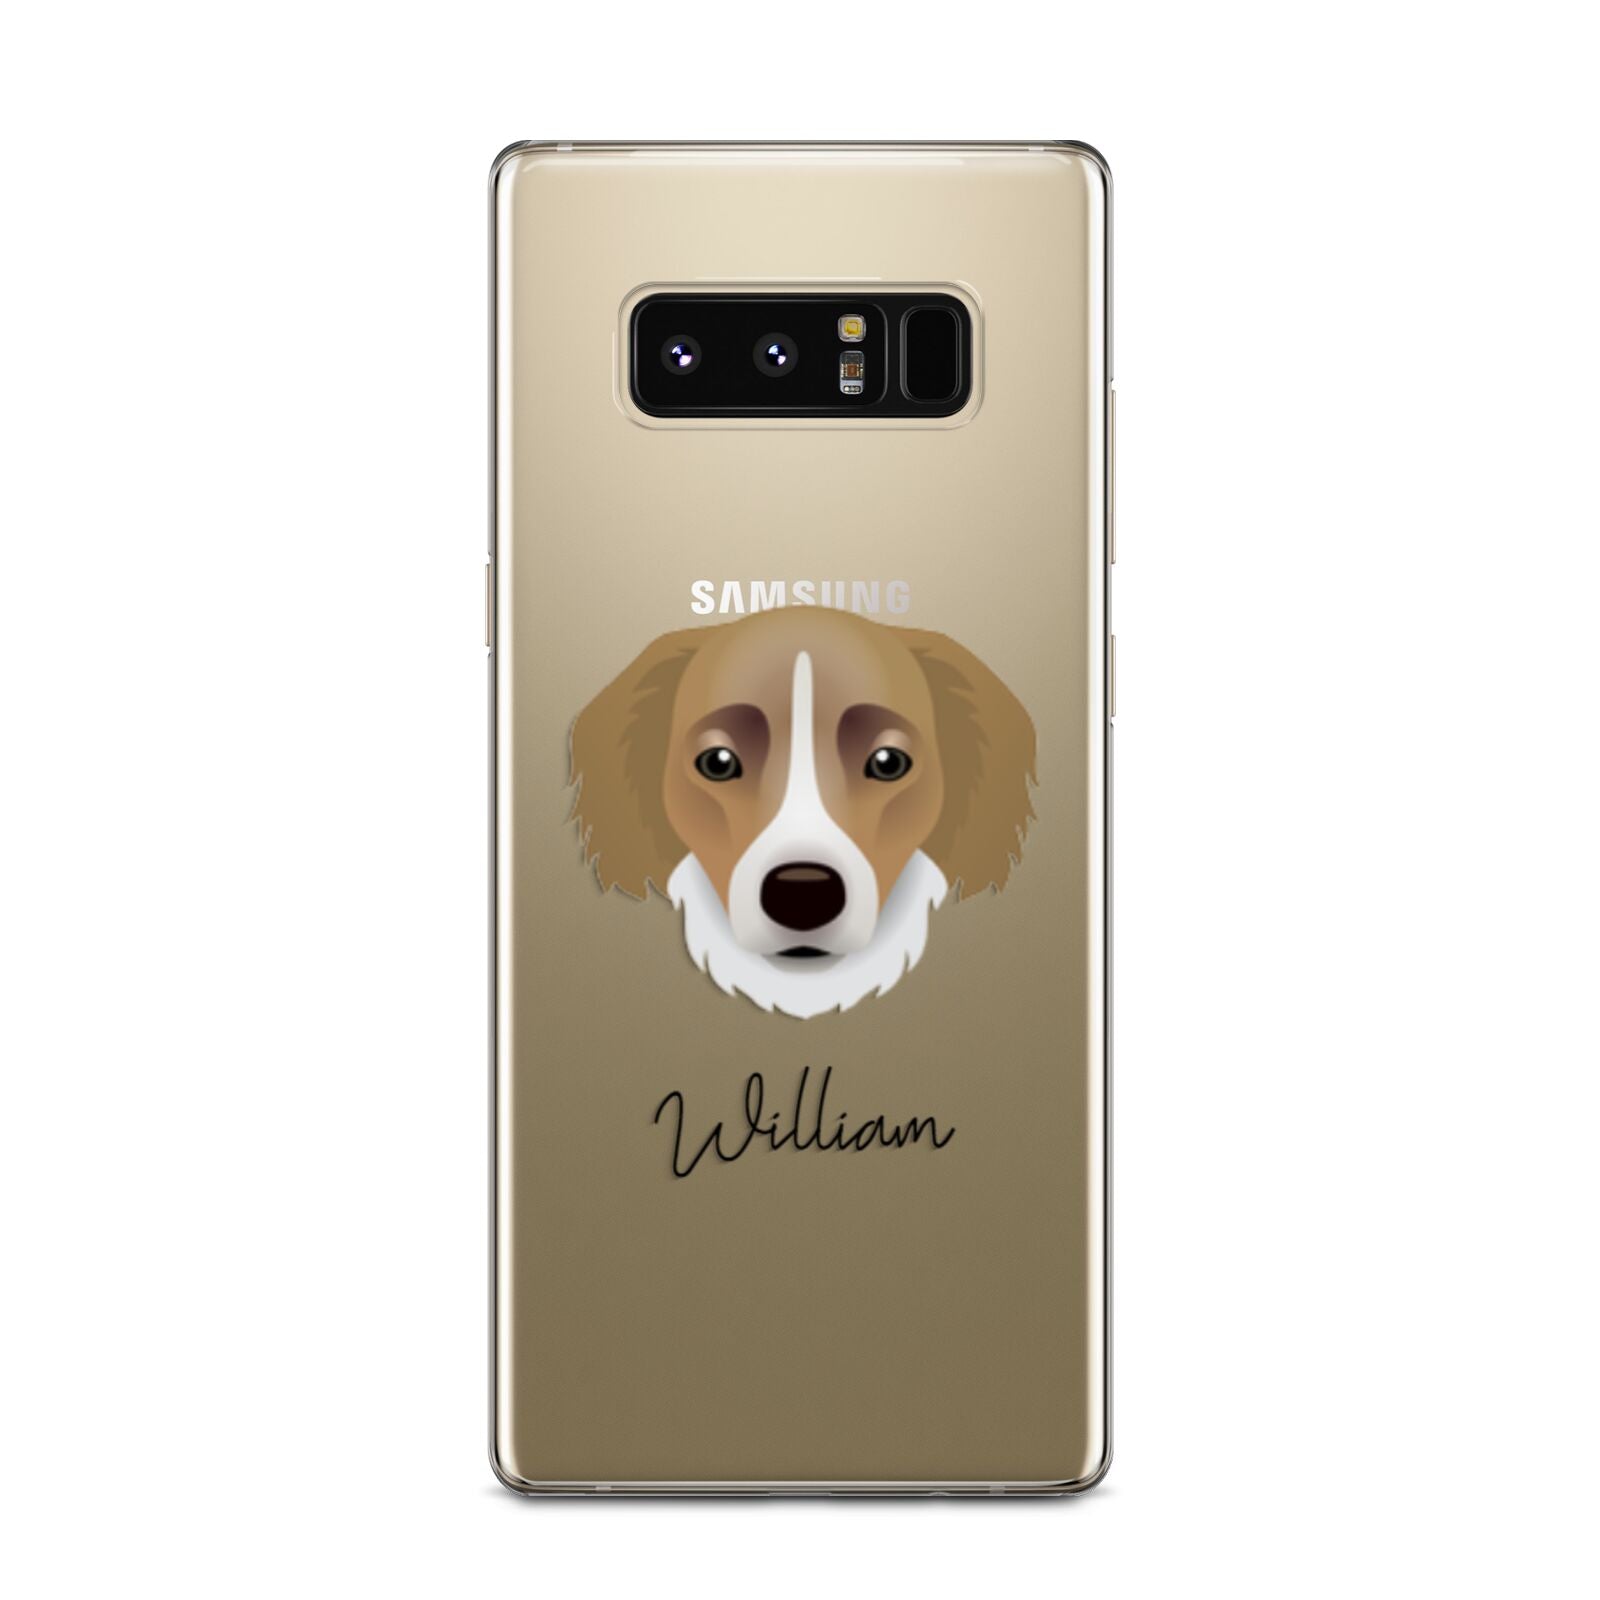 Siberian Cocker Personalised Samsung Galaxy Note 8 Case